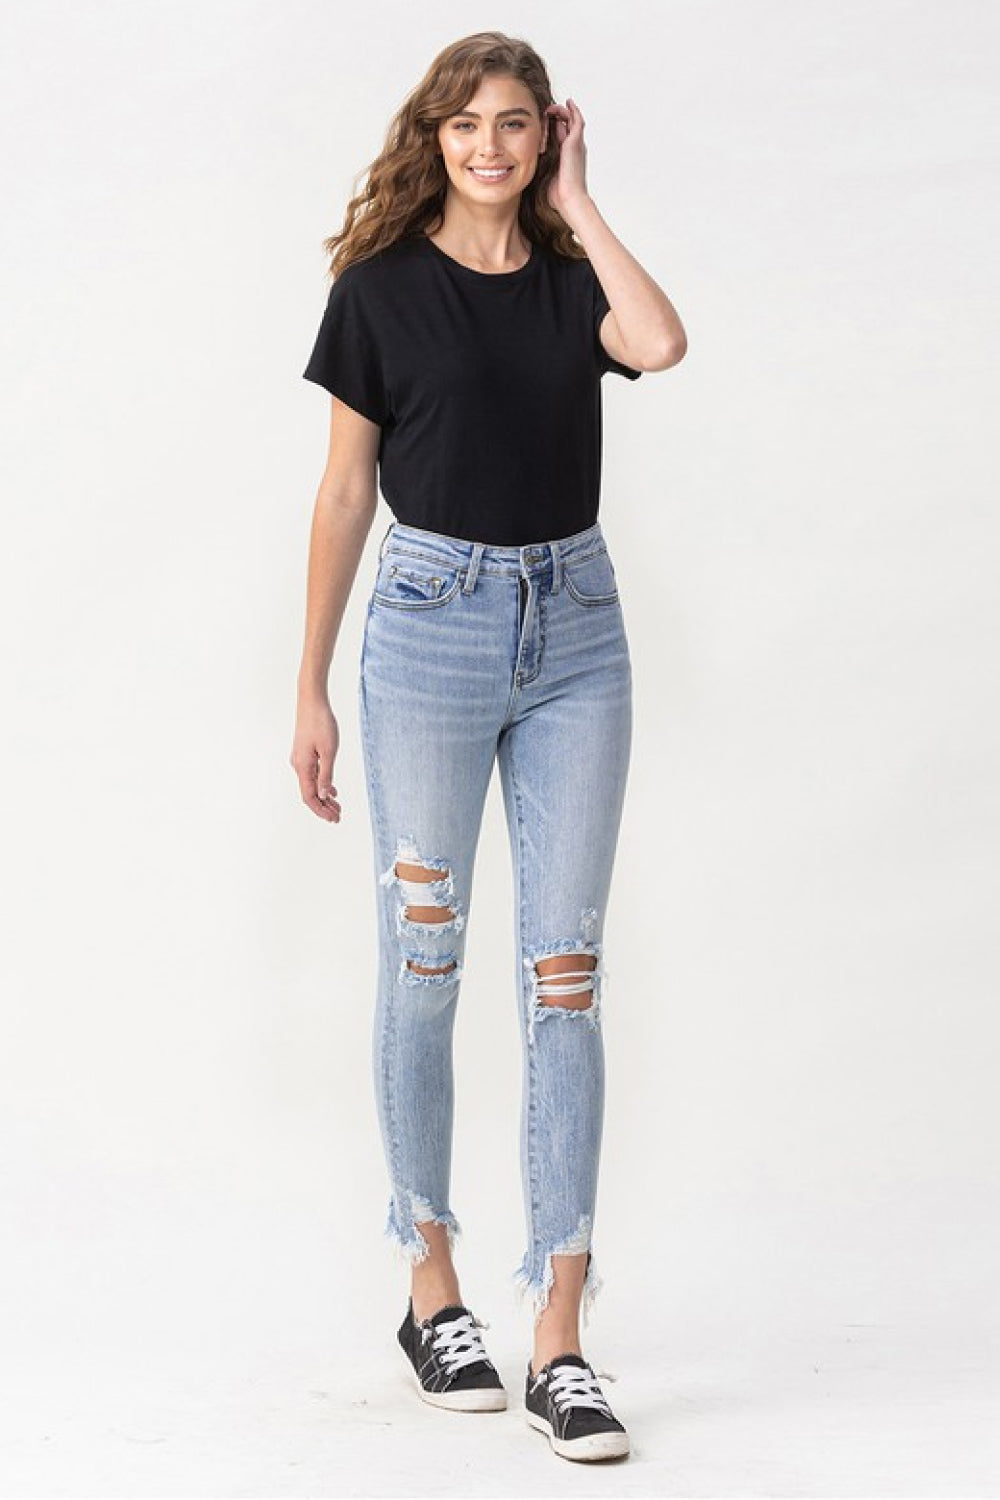 Lovervet Full Size Lauren Distressed High Rise Skinny Jeans - Nicole Lee Apparel